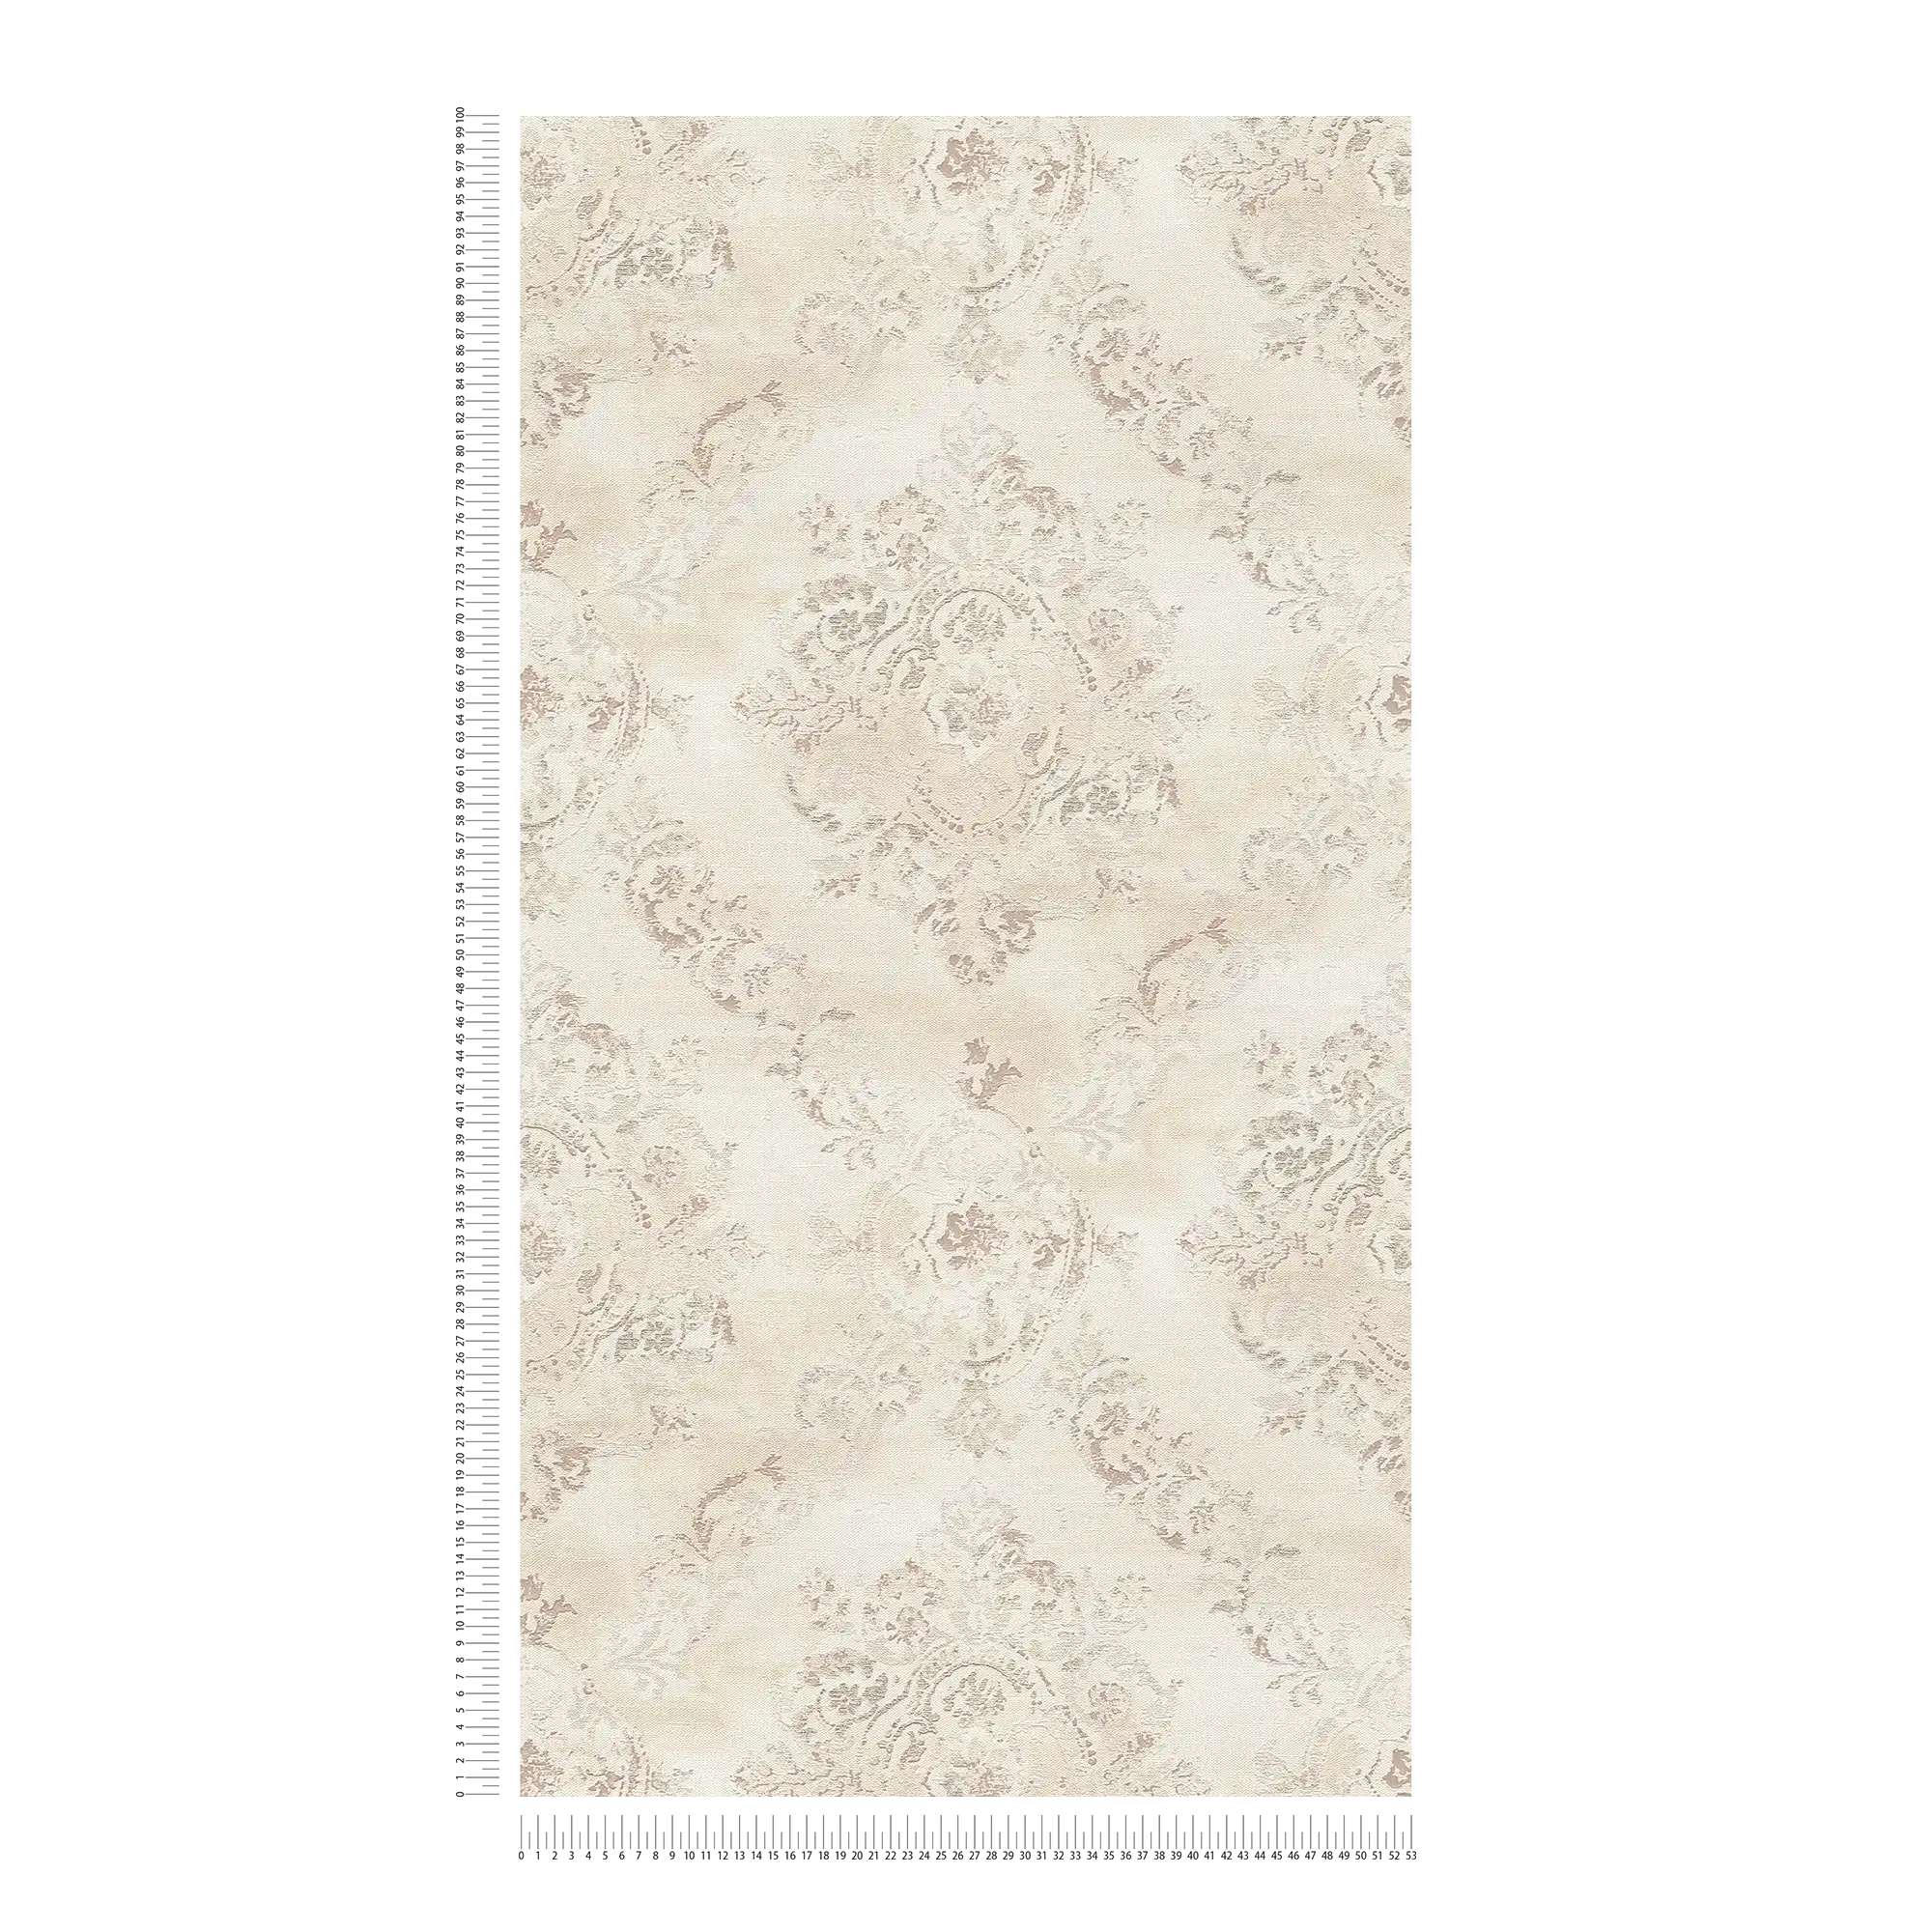             Textielachtig behang met ornamenteel patroon in used look - metallic, crème, beige
        